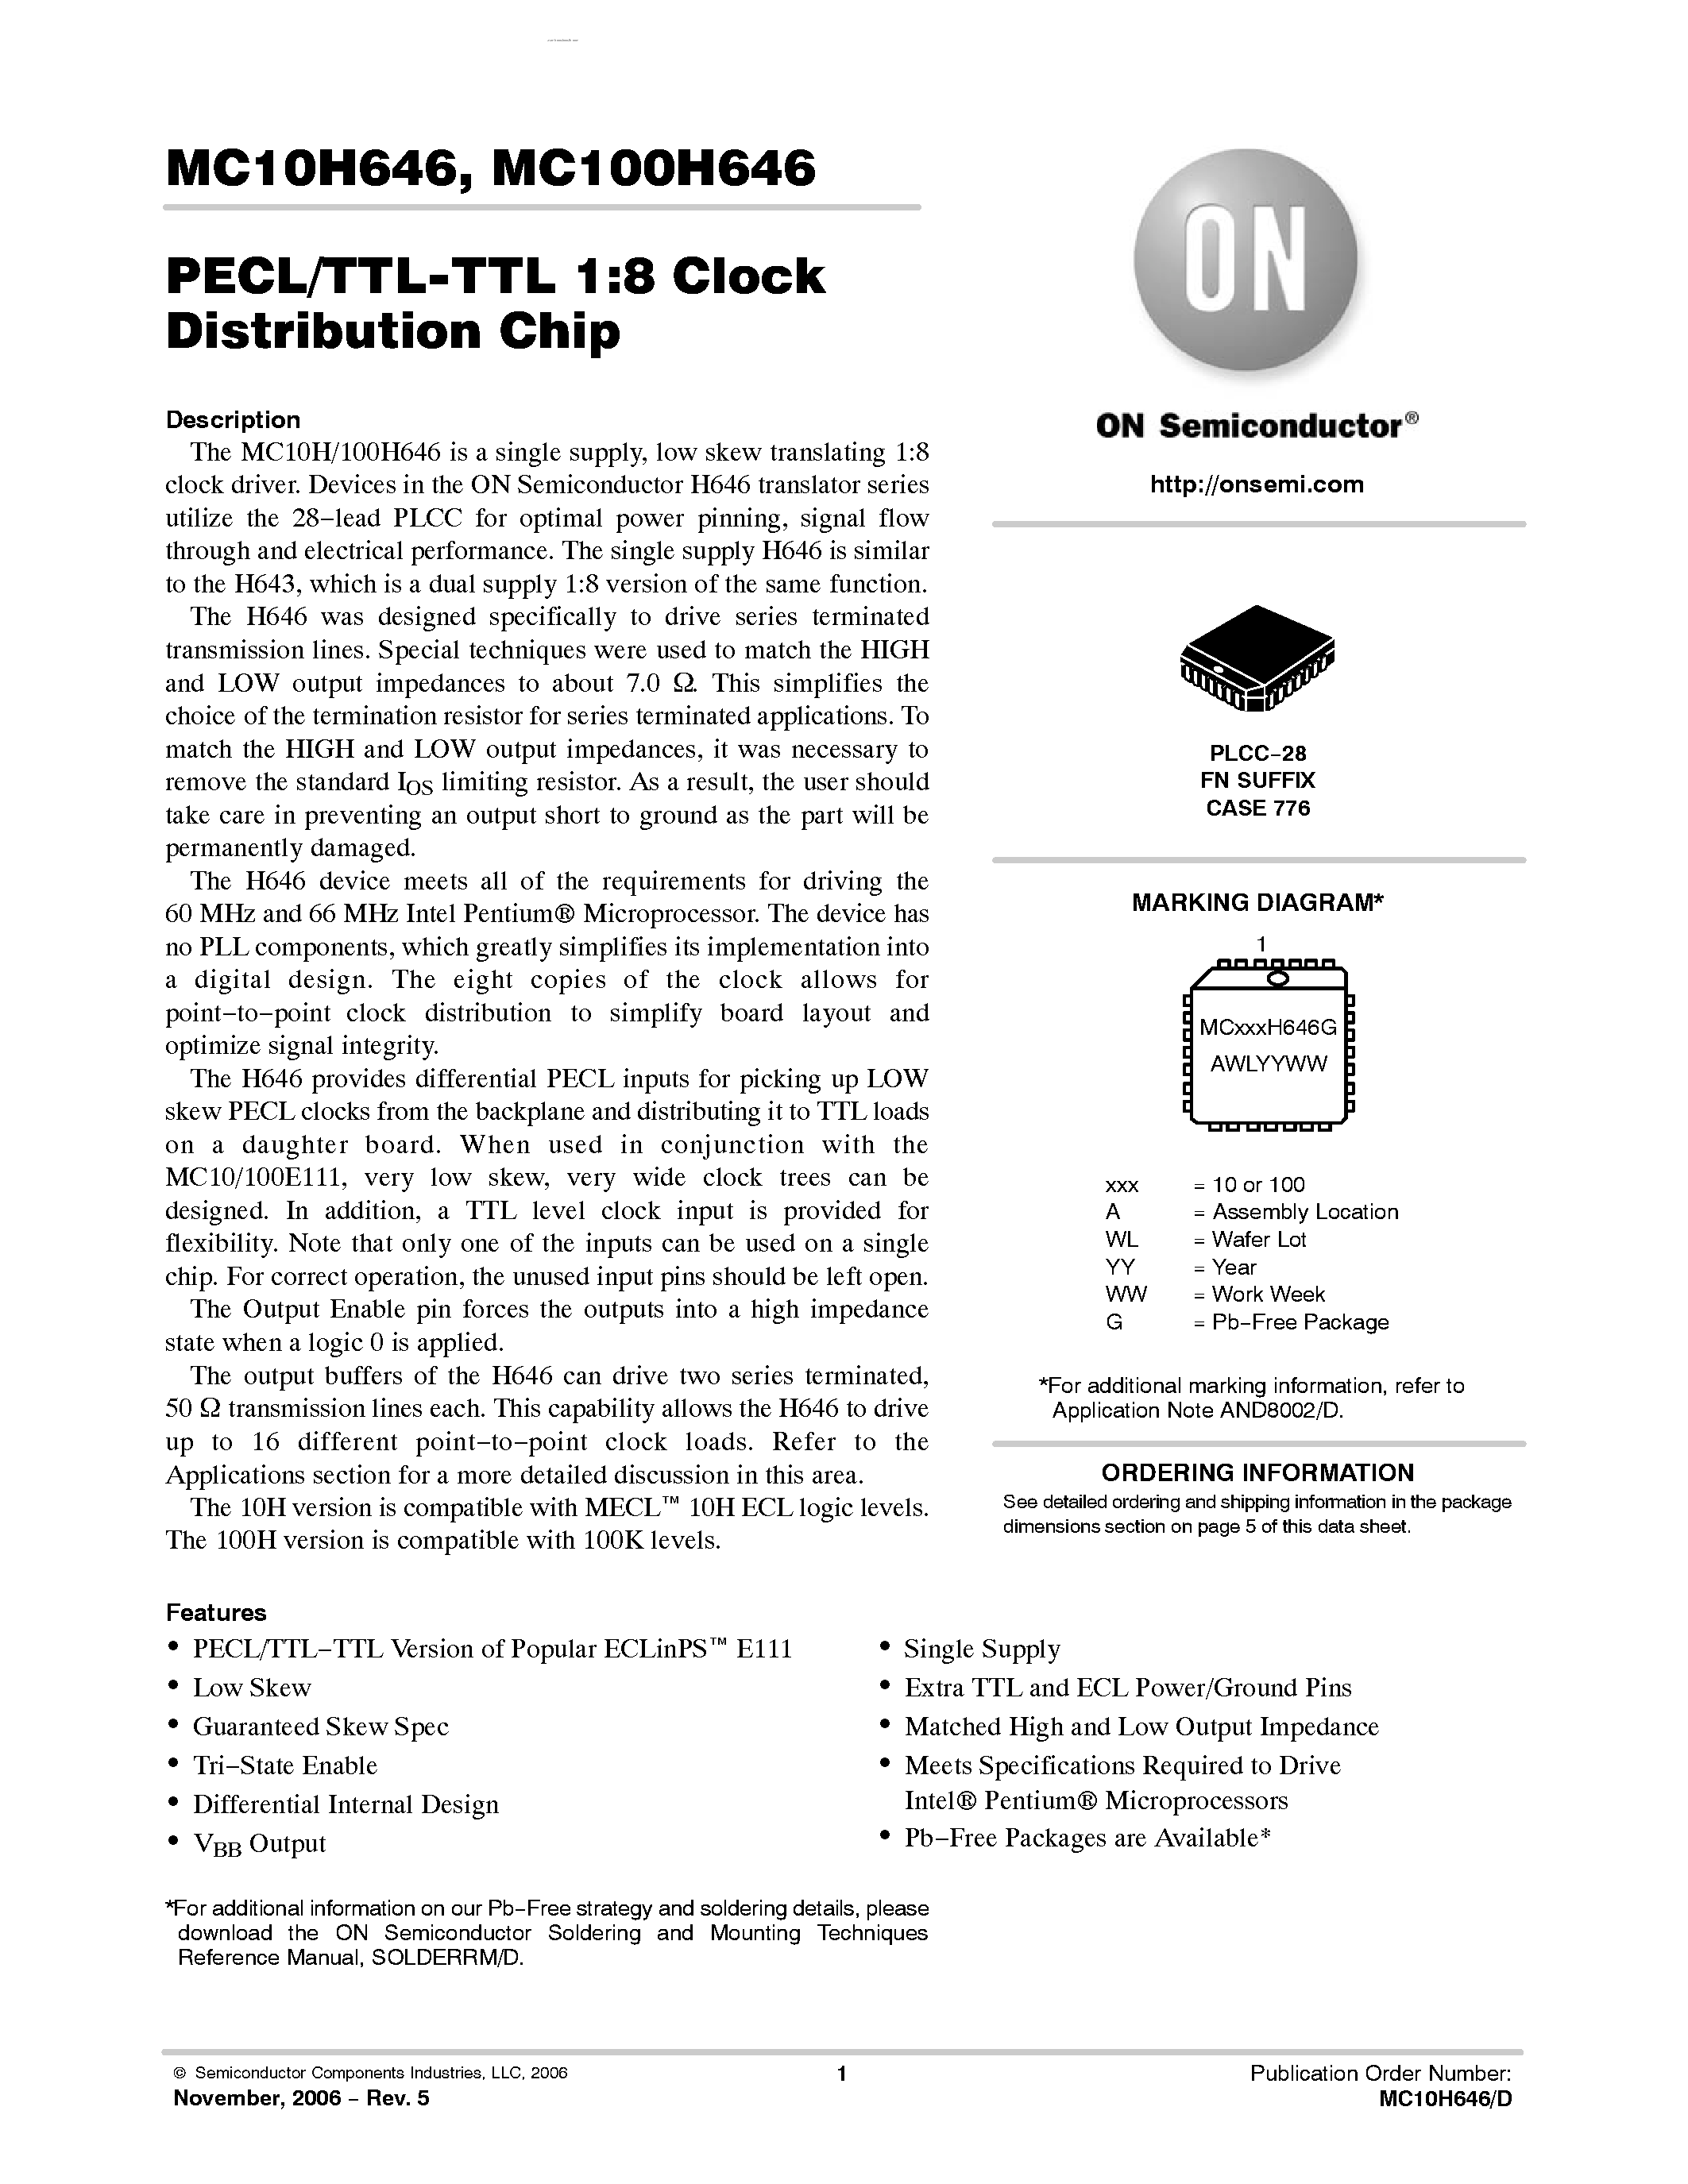 Даташит MC10H646 - PENTIUM MICROPROCESSOR PECL/TTL-TTL CLOCK DRIVER страница 1